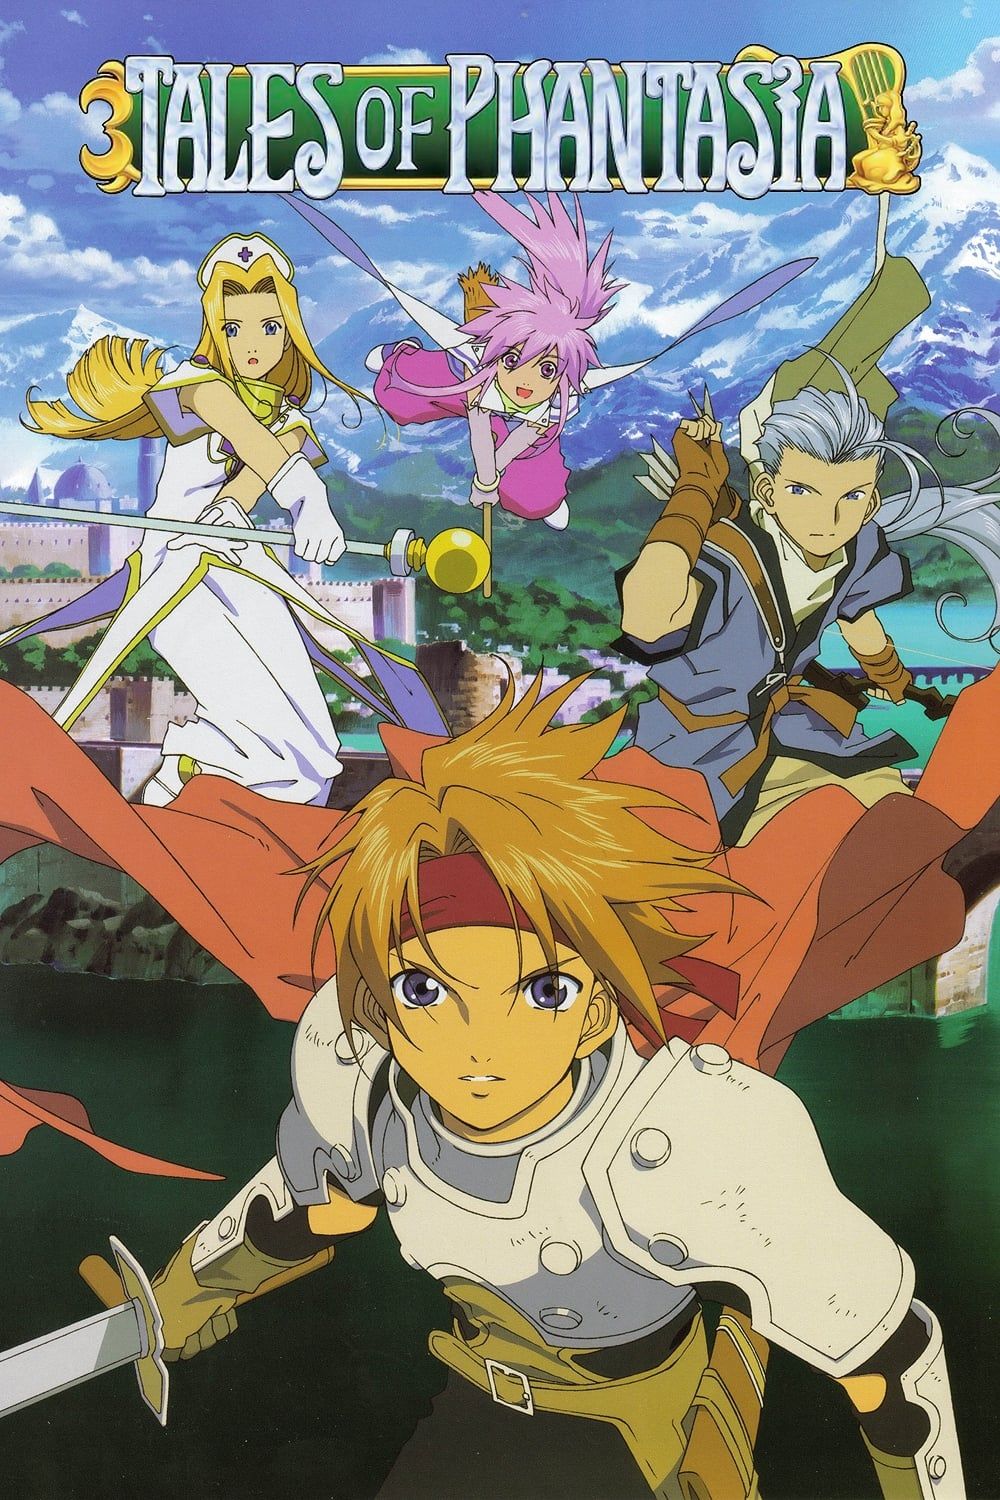 Tales of Phantasia (OVA) (Sub) New Released